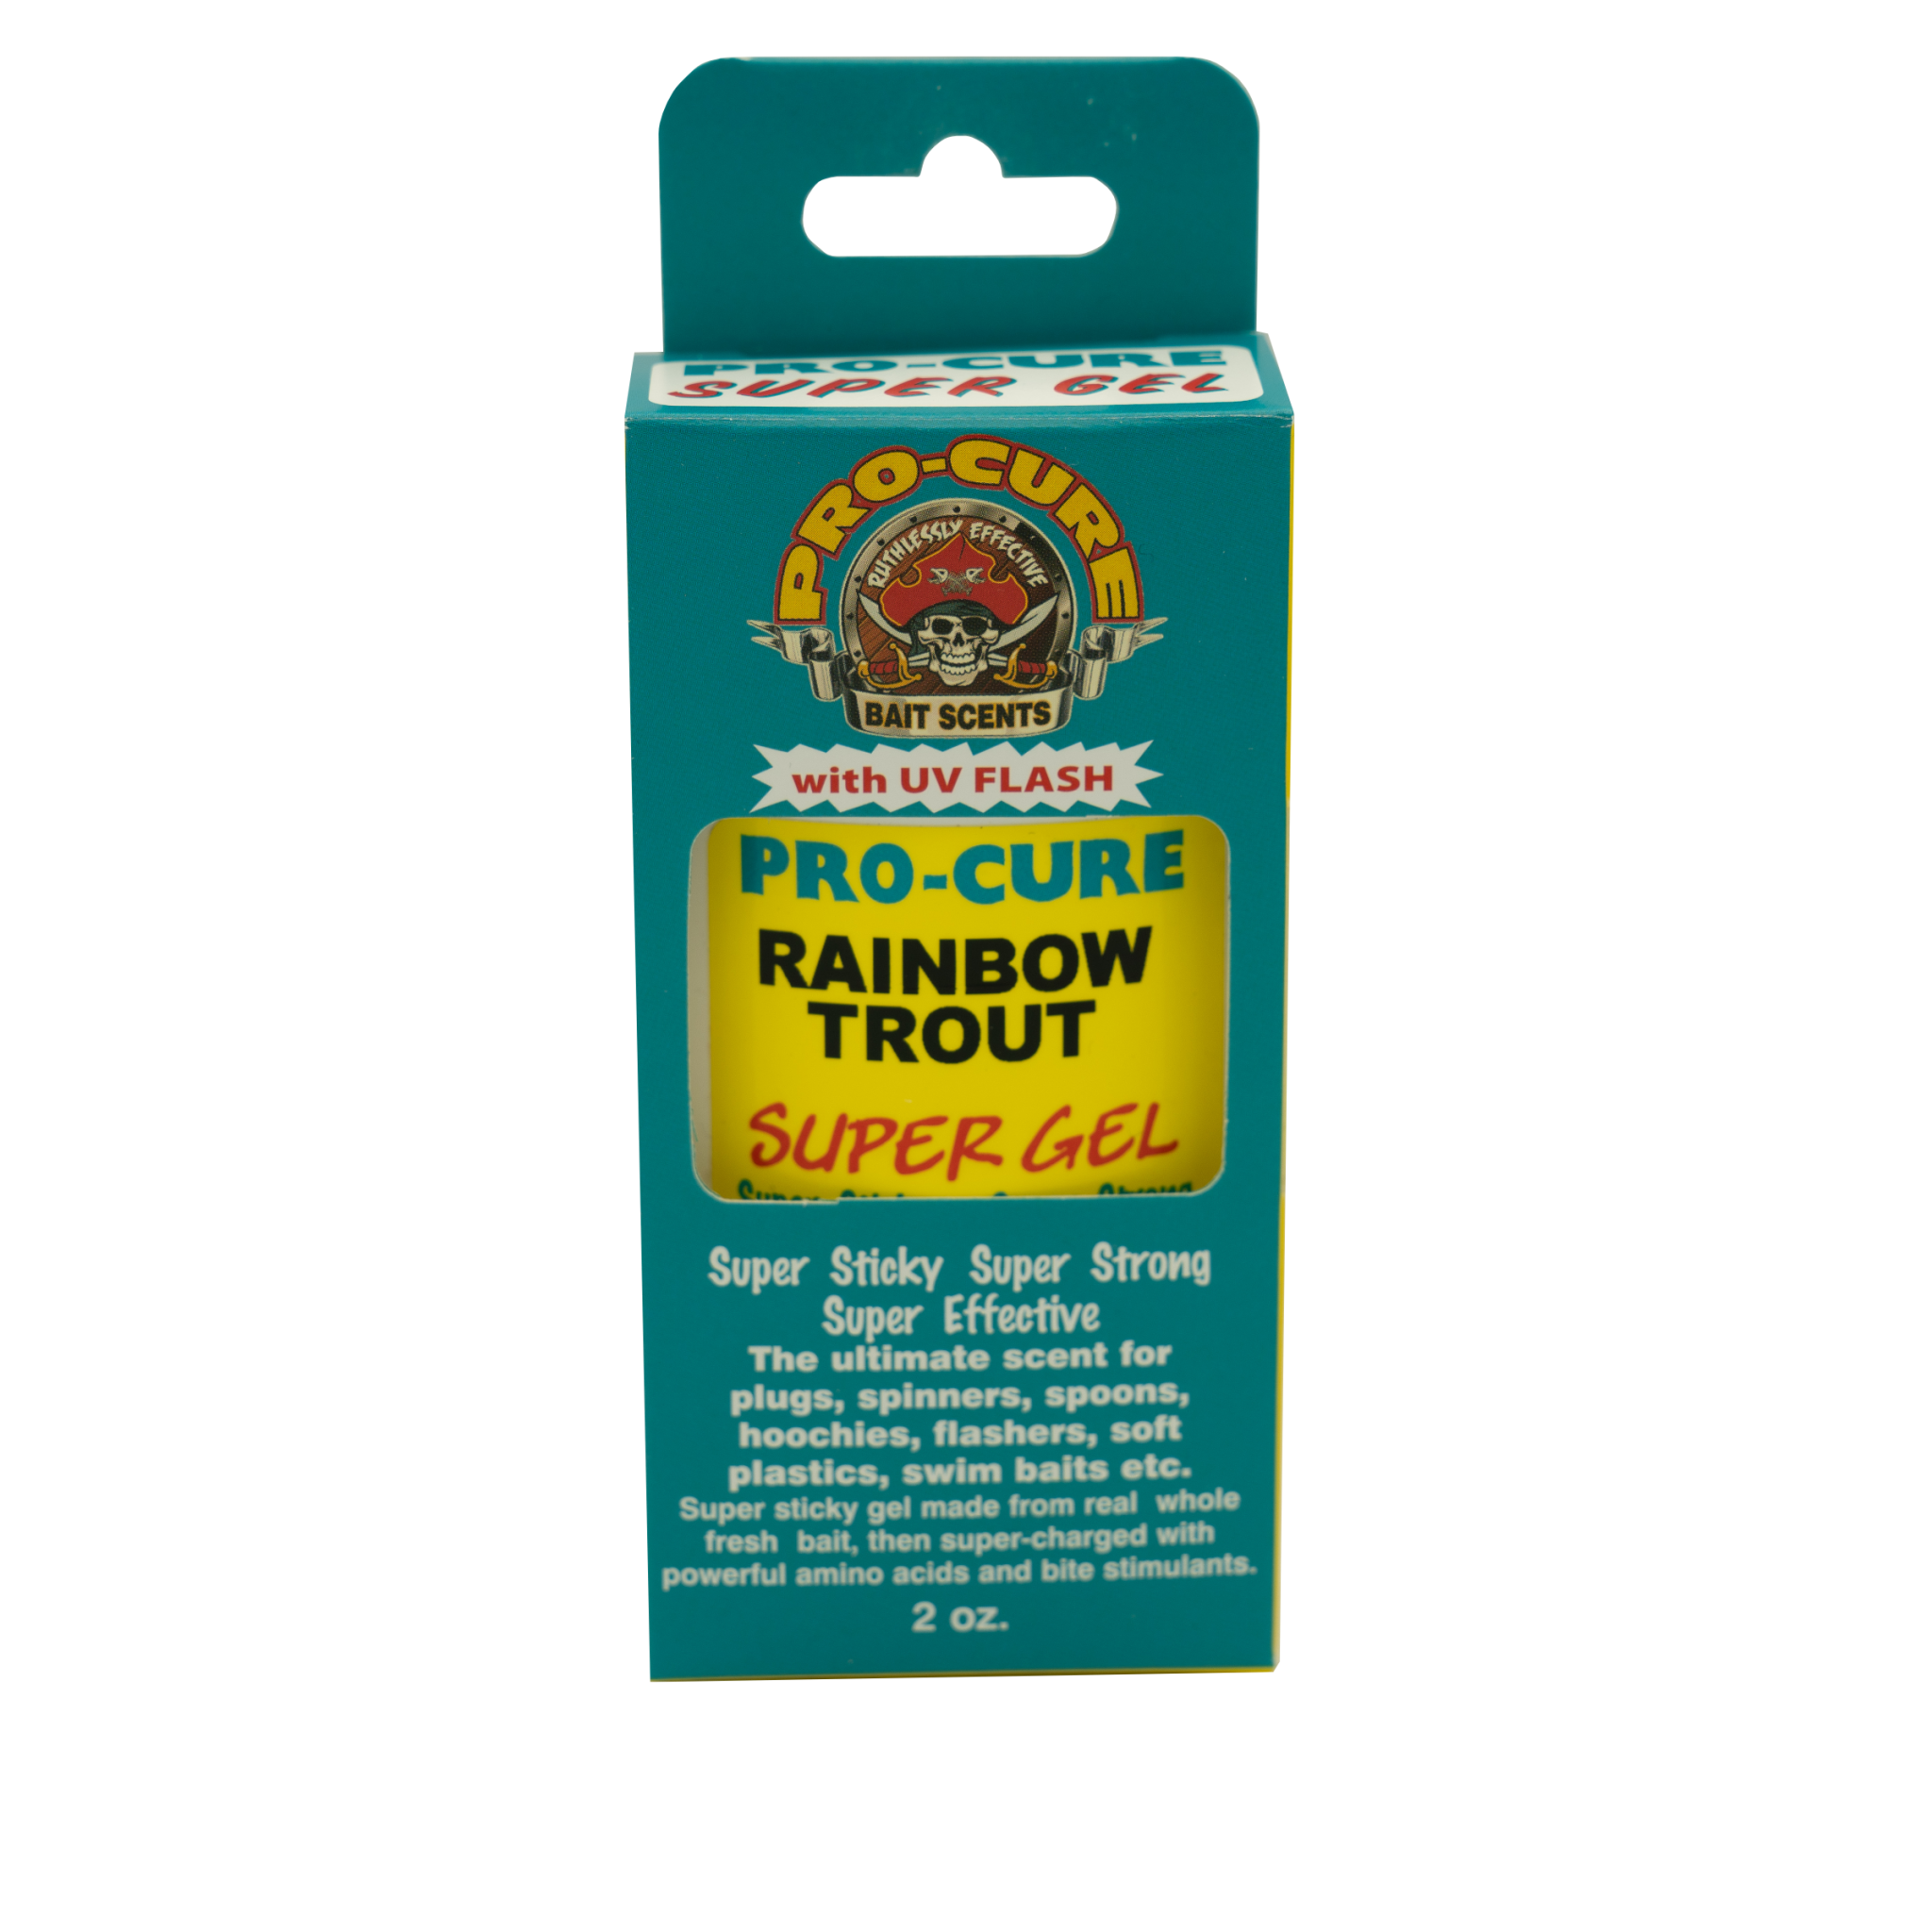 RAINBOW TROUT SUPER GEL – Pro-Cure, Inc